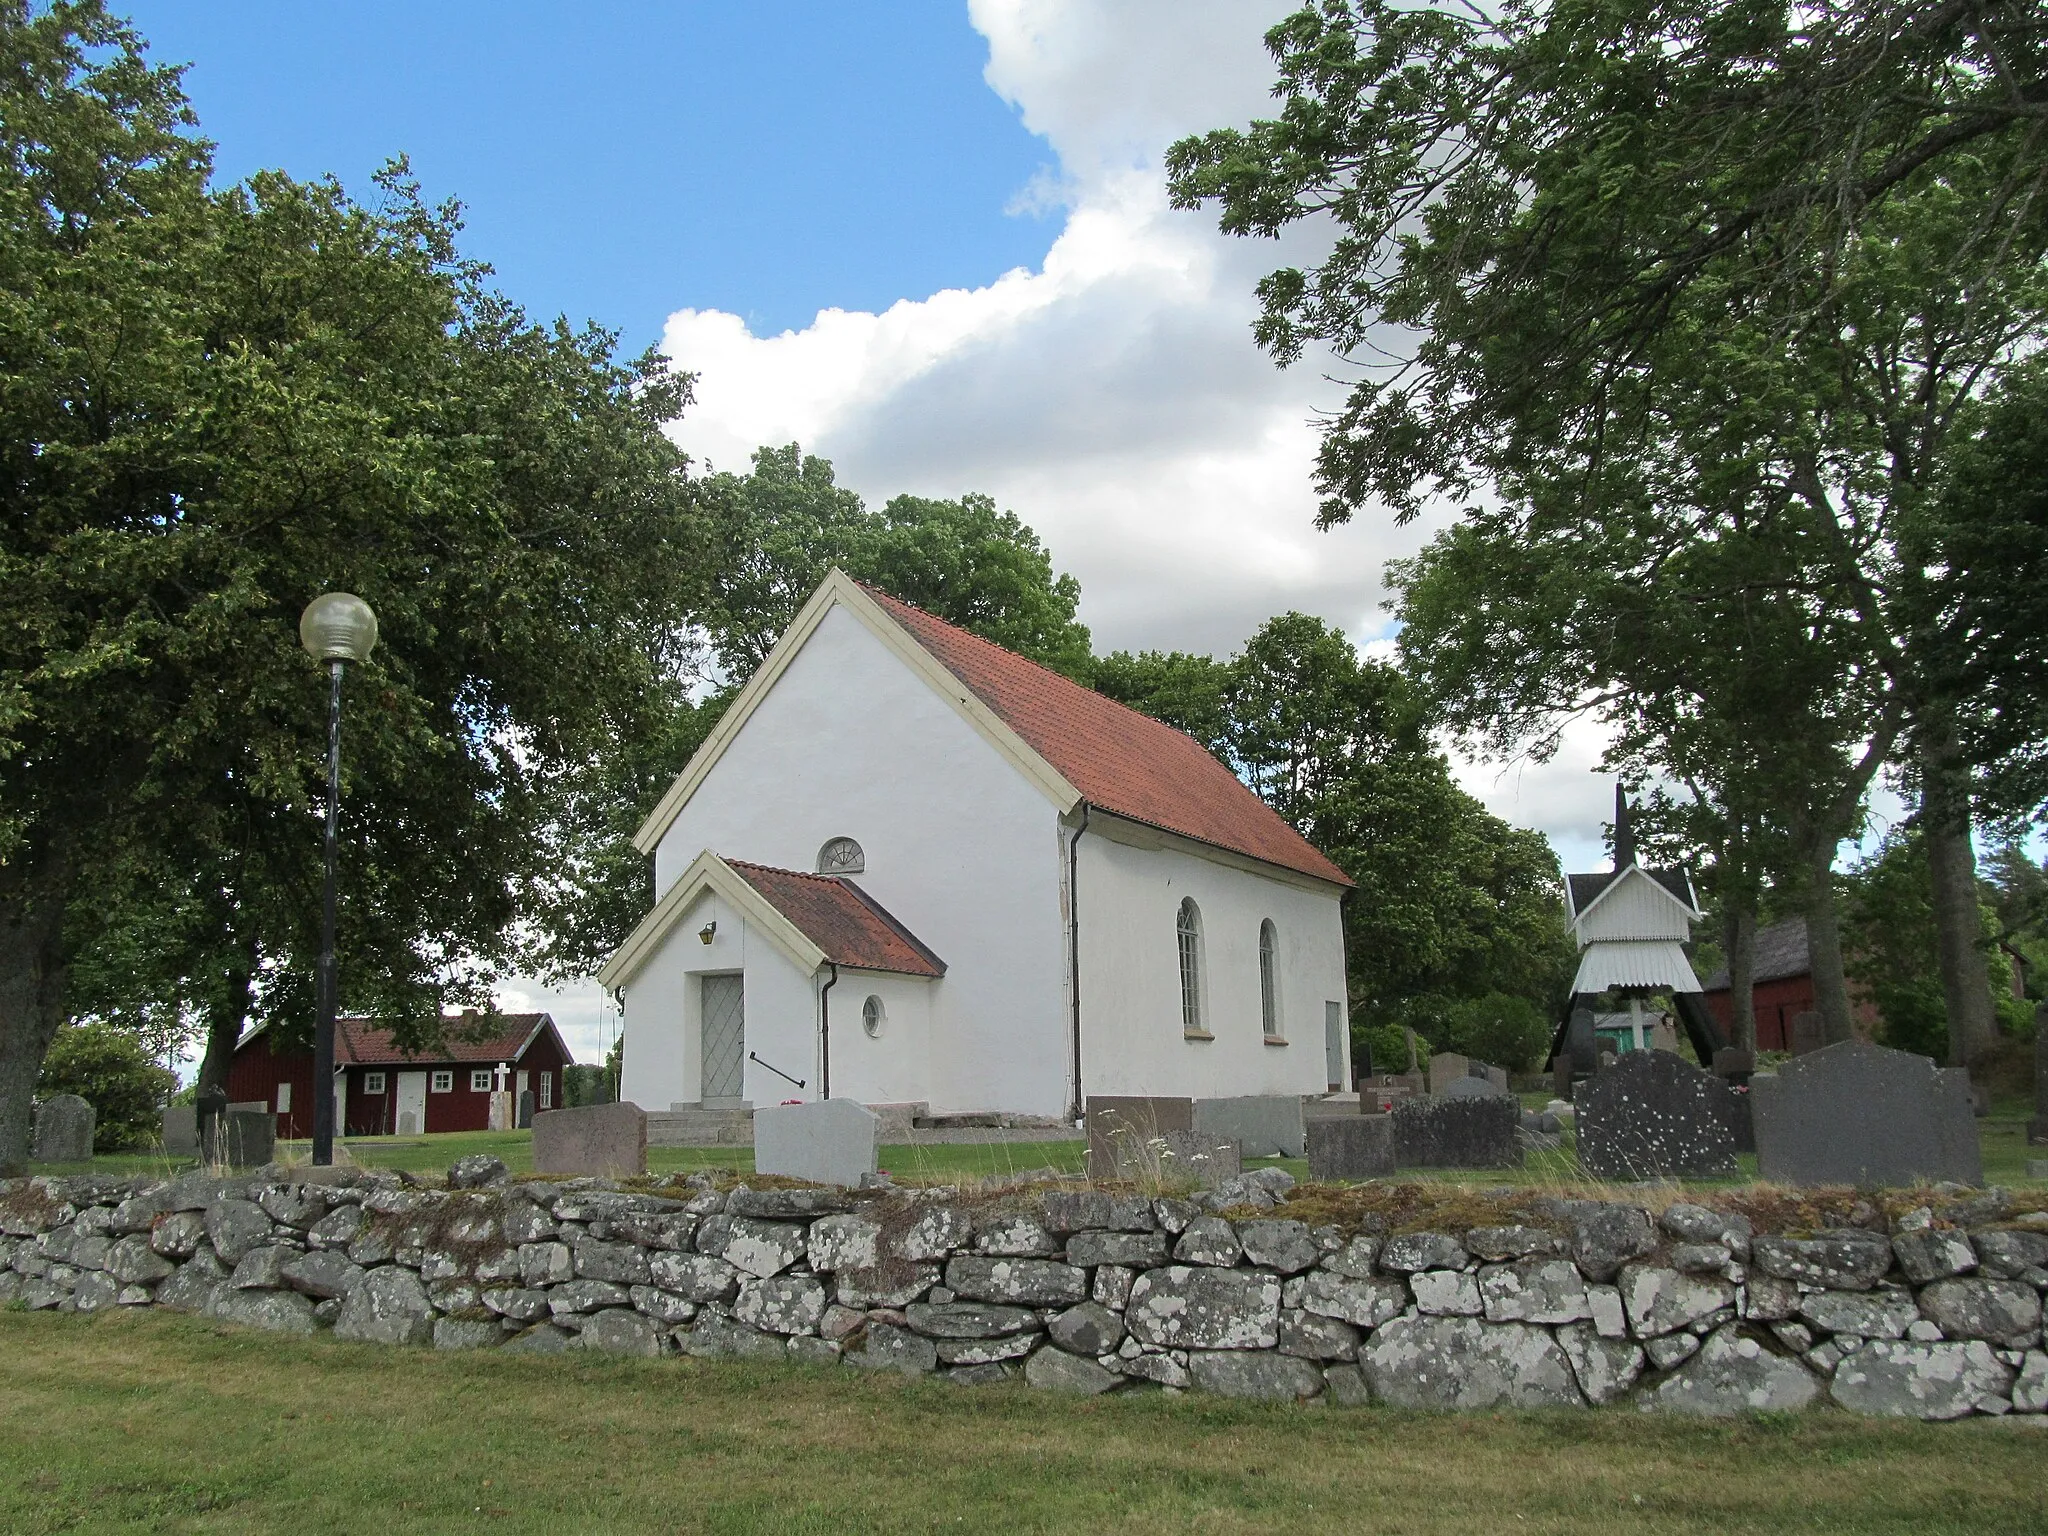 Photo showing: Fåglum church in Fåglum Parish, Essunga Municipality, Barne hundred, the Diocese of Skara, Västergötland, Västra Götaland County, Sweden.